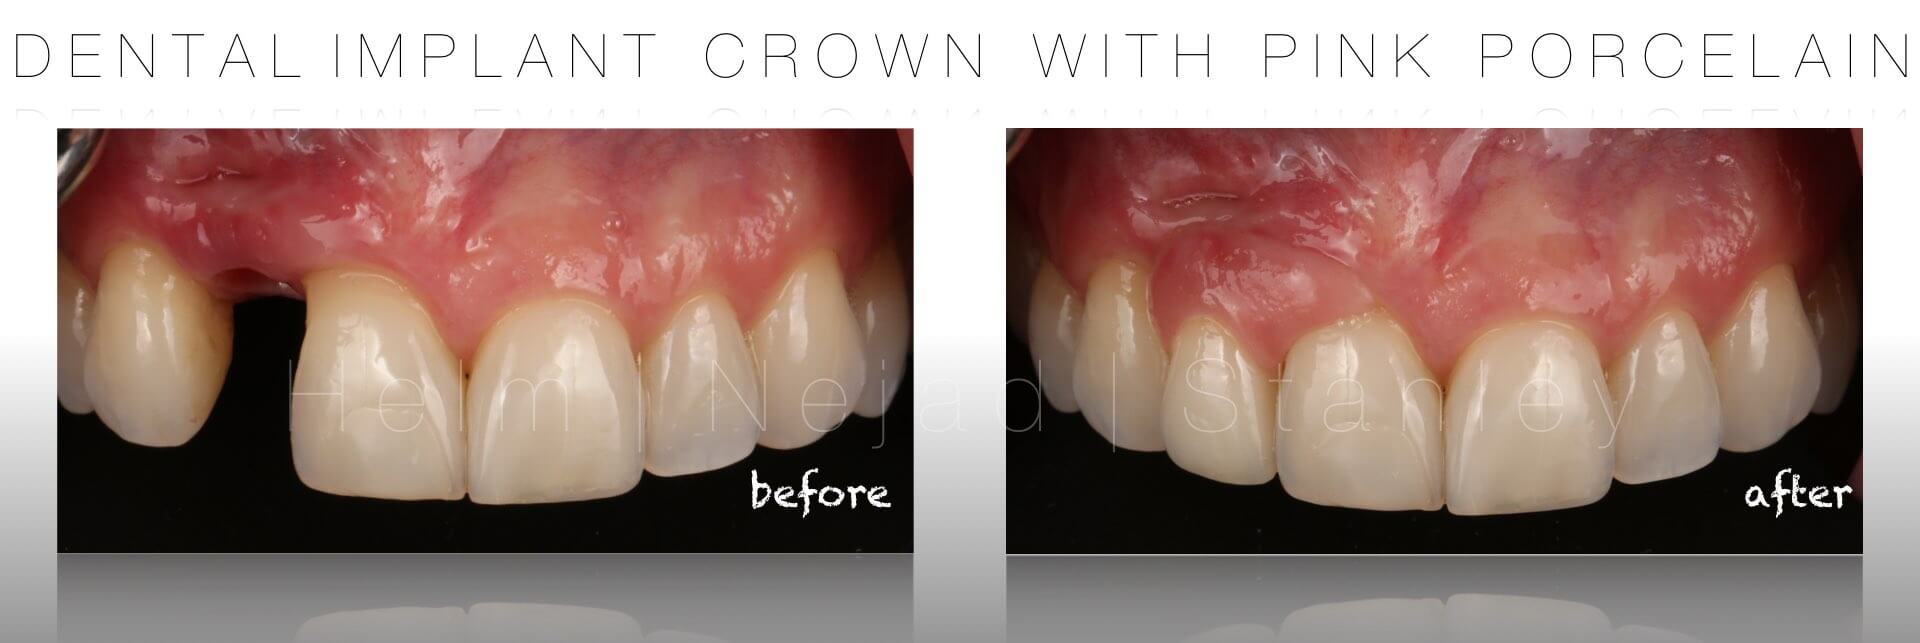 dental implant crowns